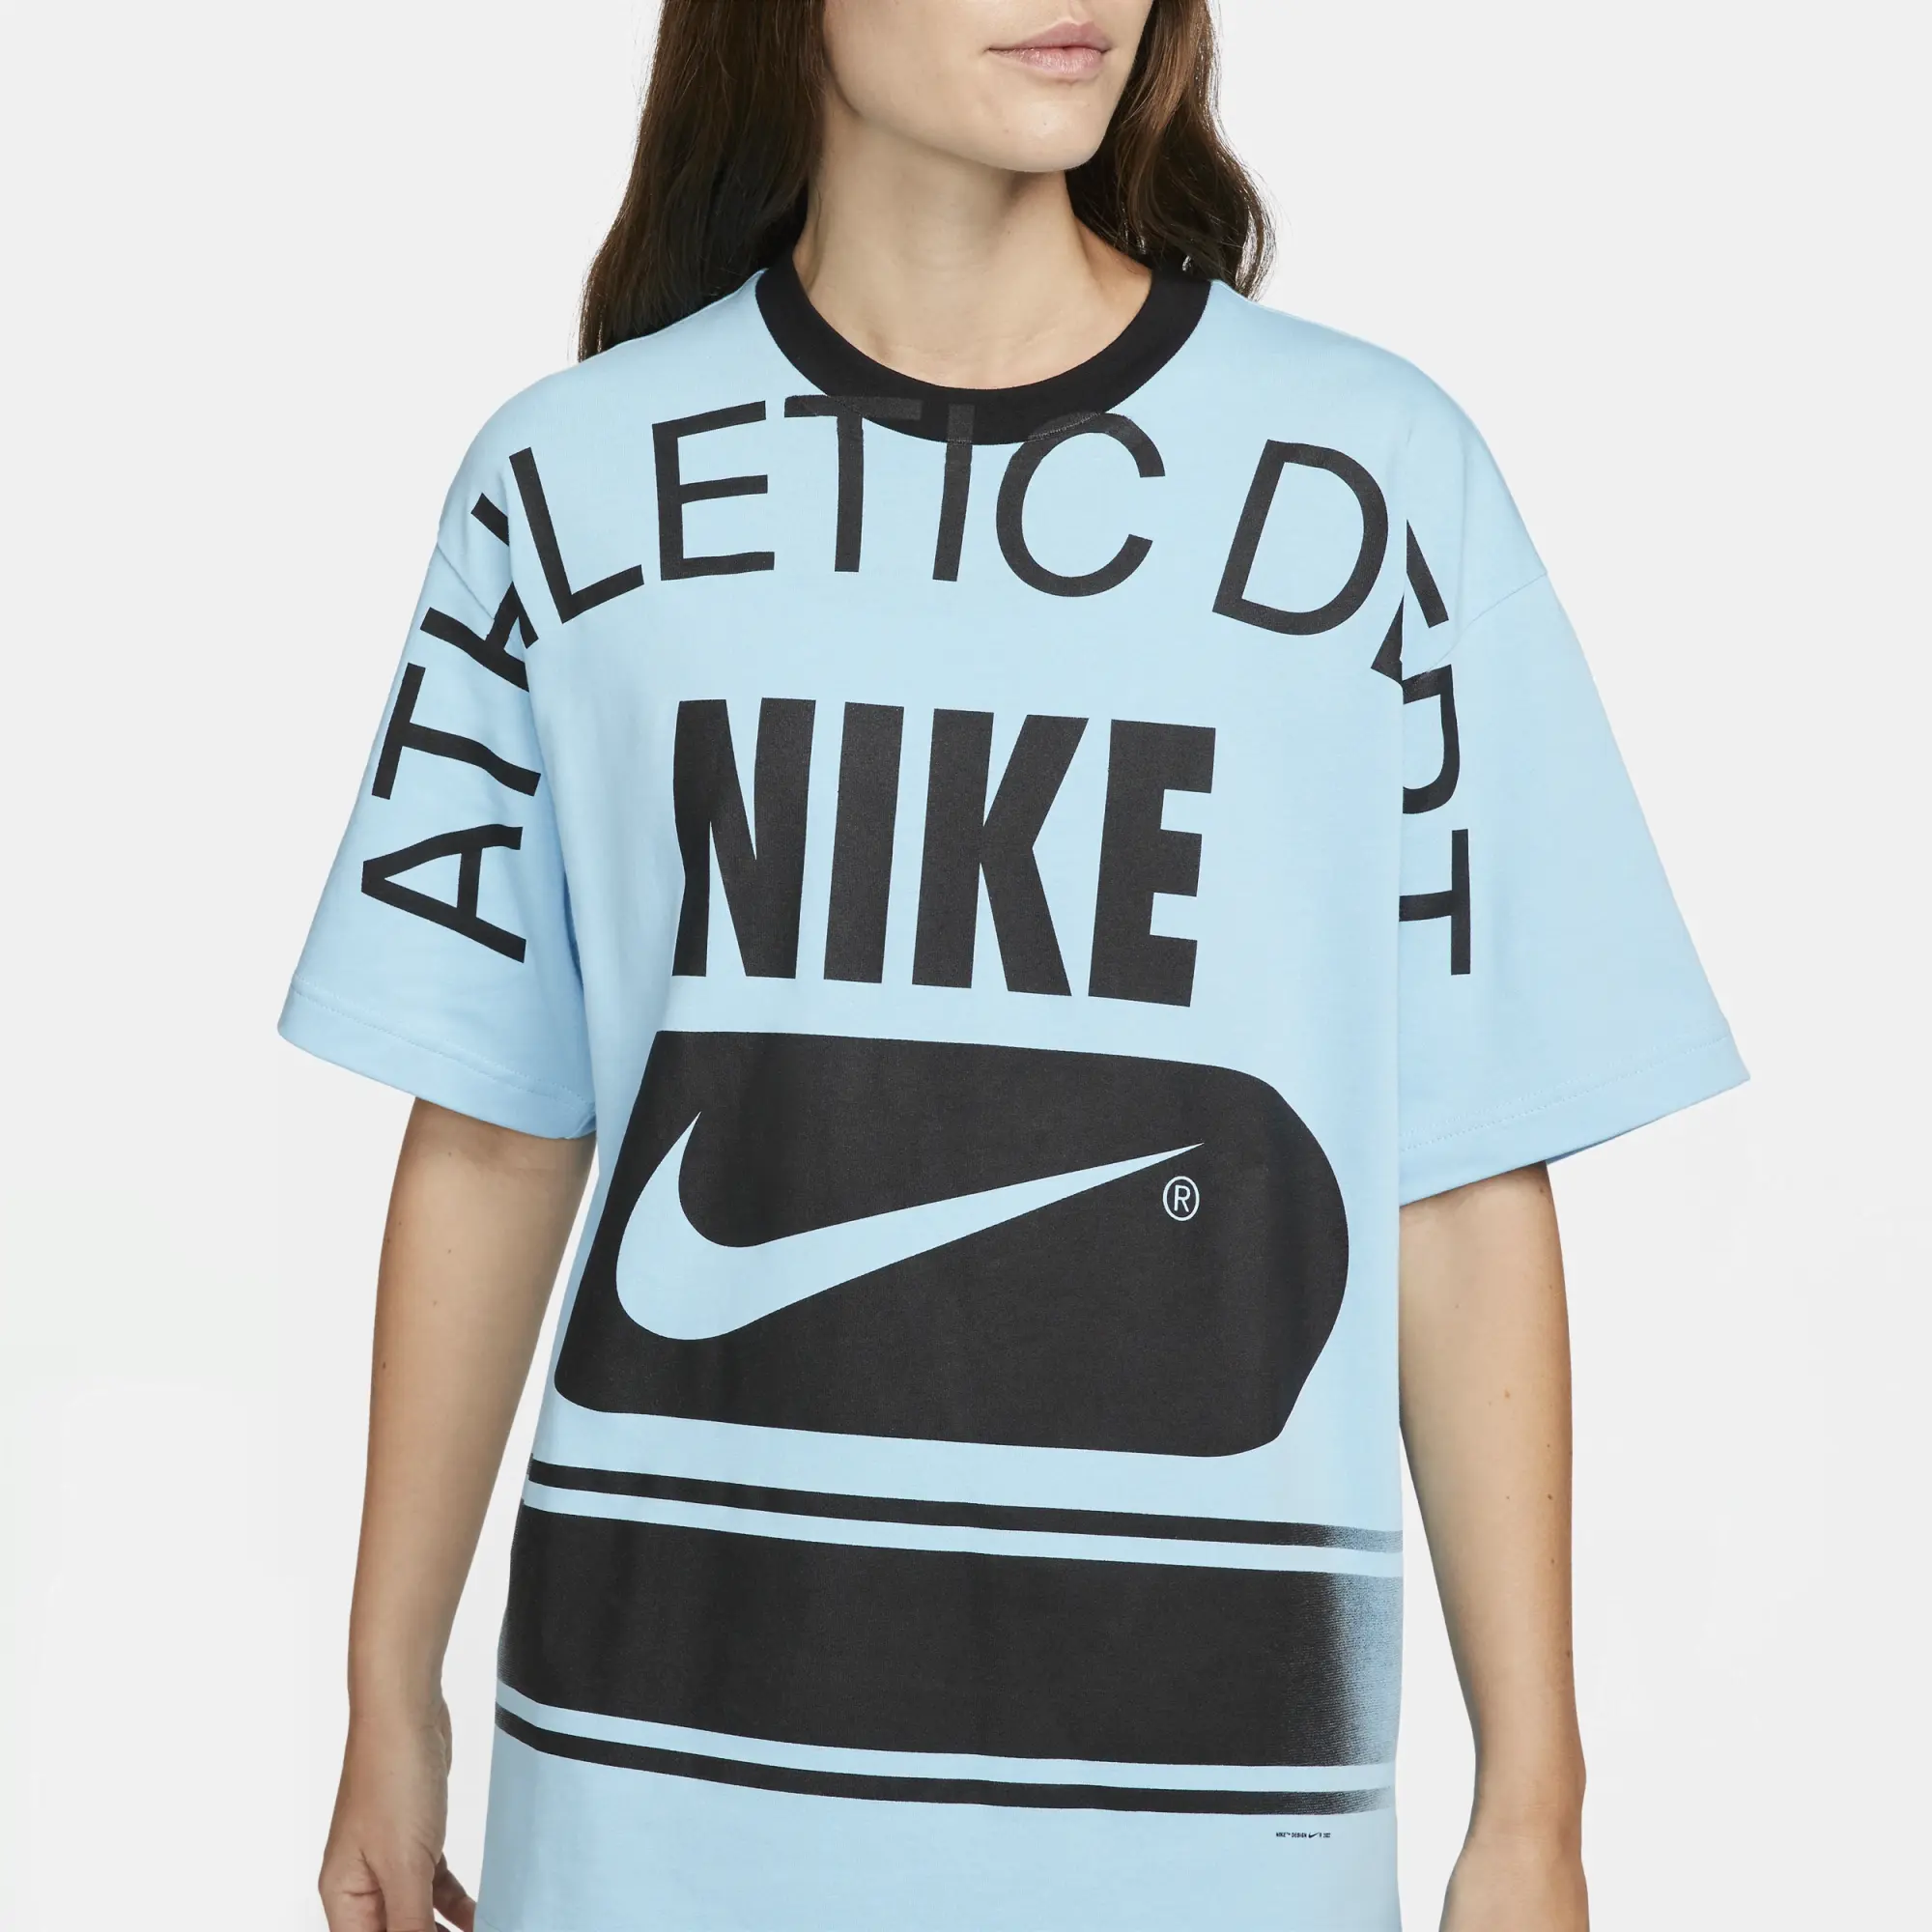 Nike Athletic Department T-Shirt, Blue, DX5839-499